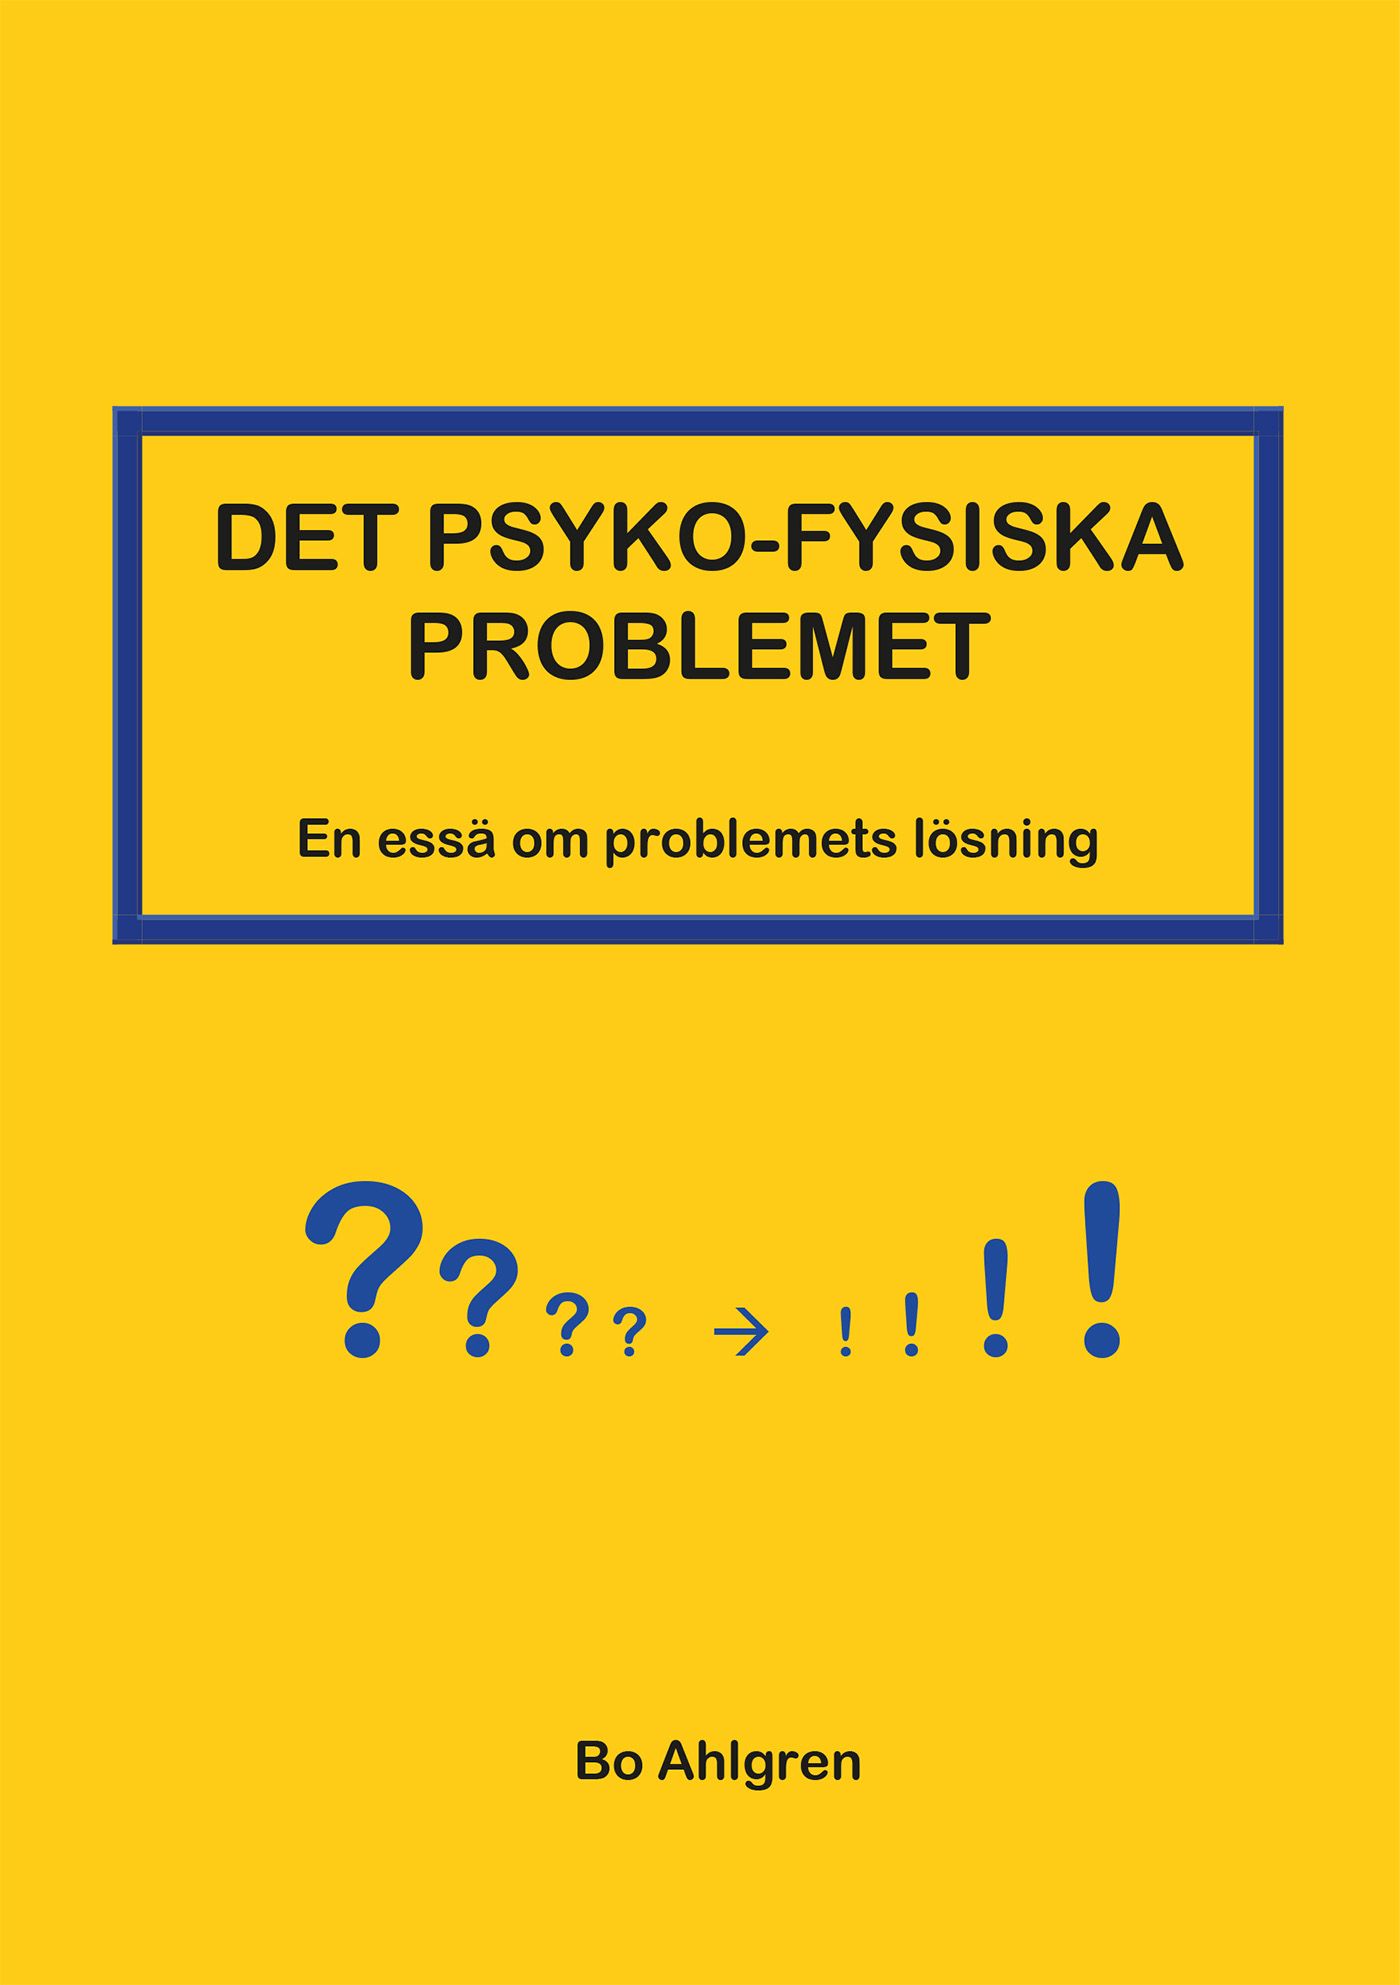 DET PSYKO-FYSISKA PROBLEMET, eBook by Bo Ahlgren